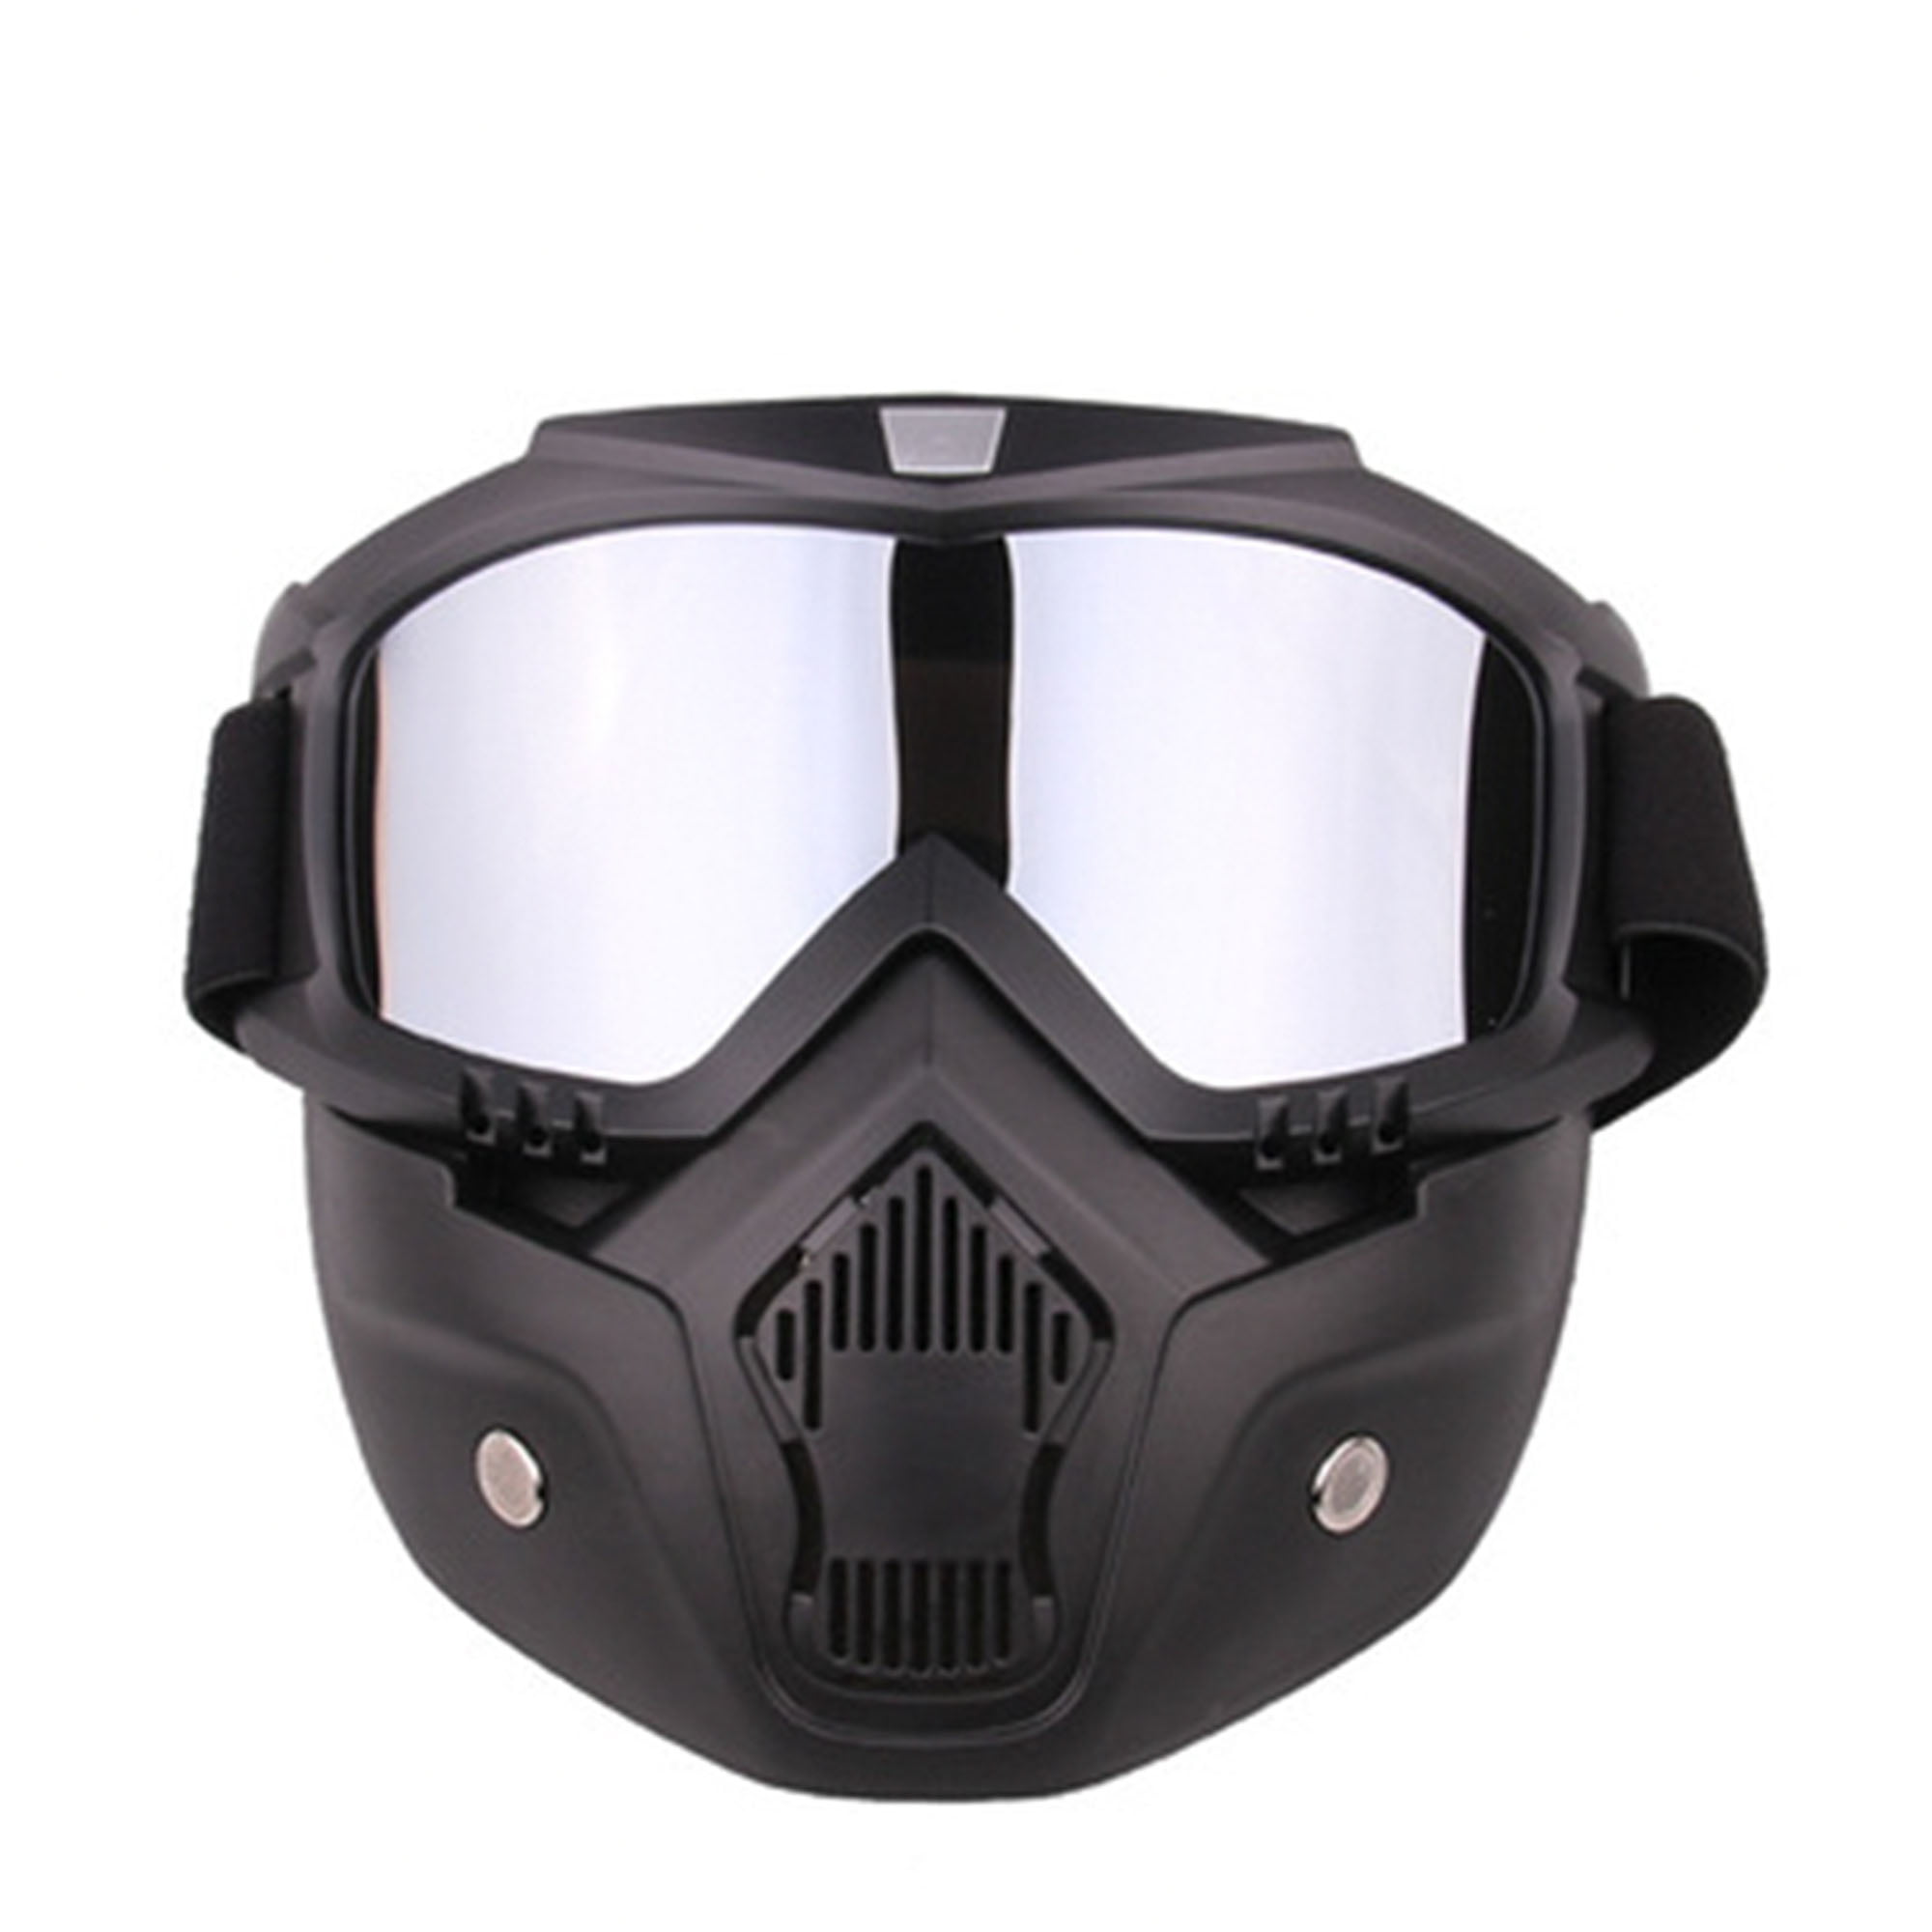 Details about   Ski Goggles Snow Glasses Polarized Uv400 Anti-fog Adjustable Headband Safety 